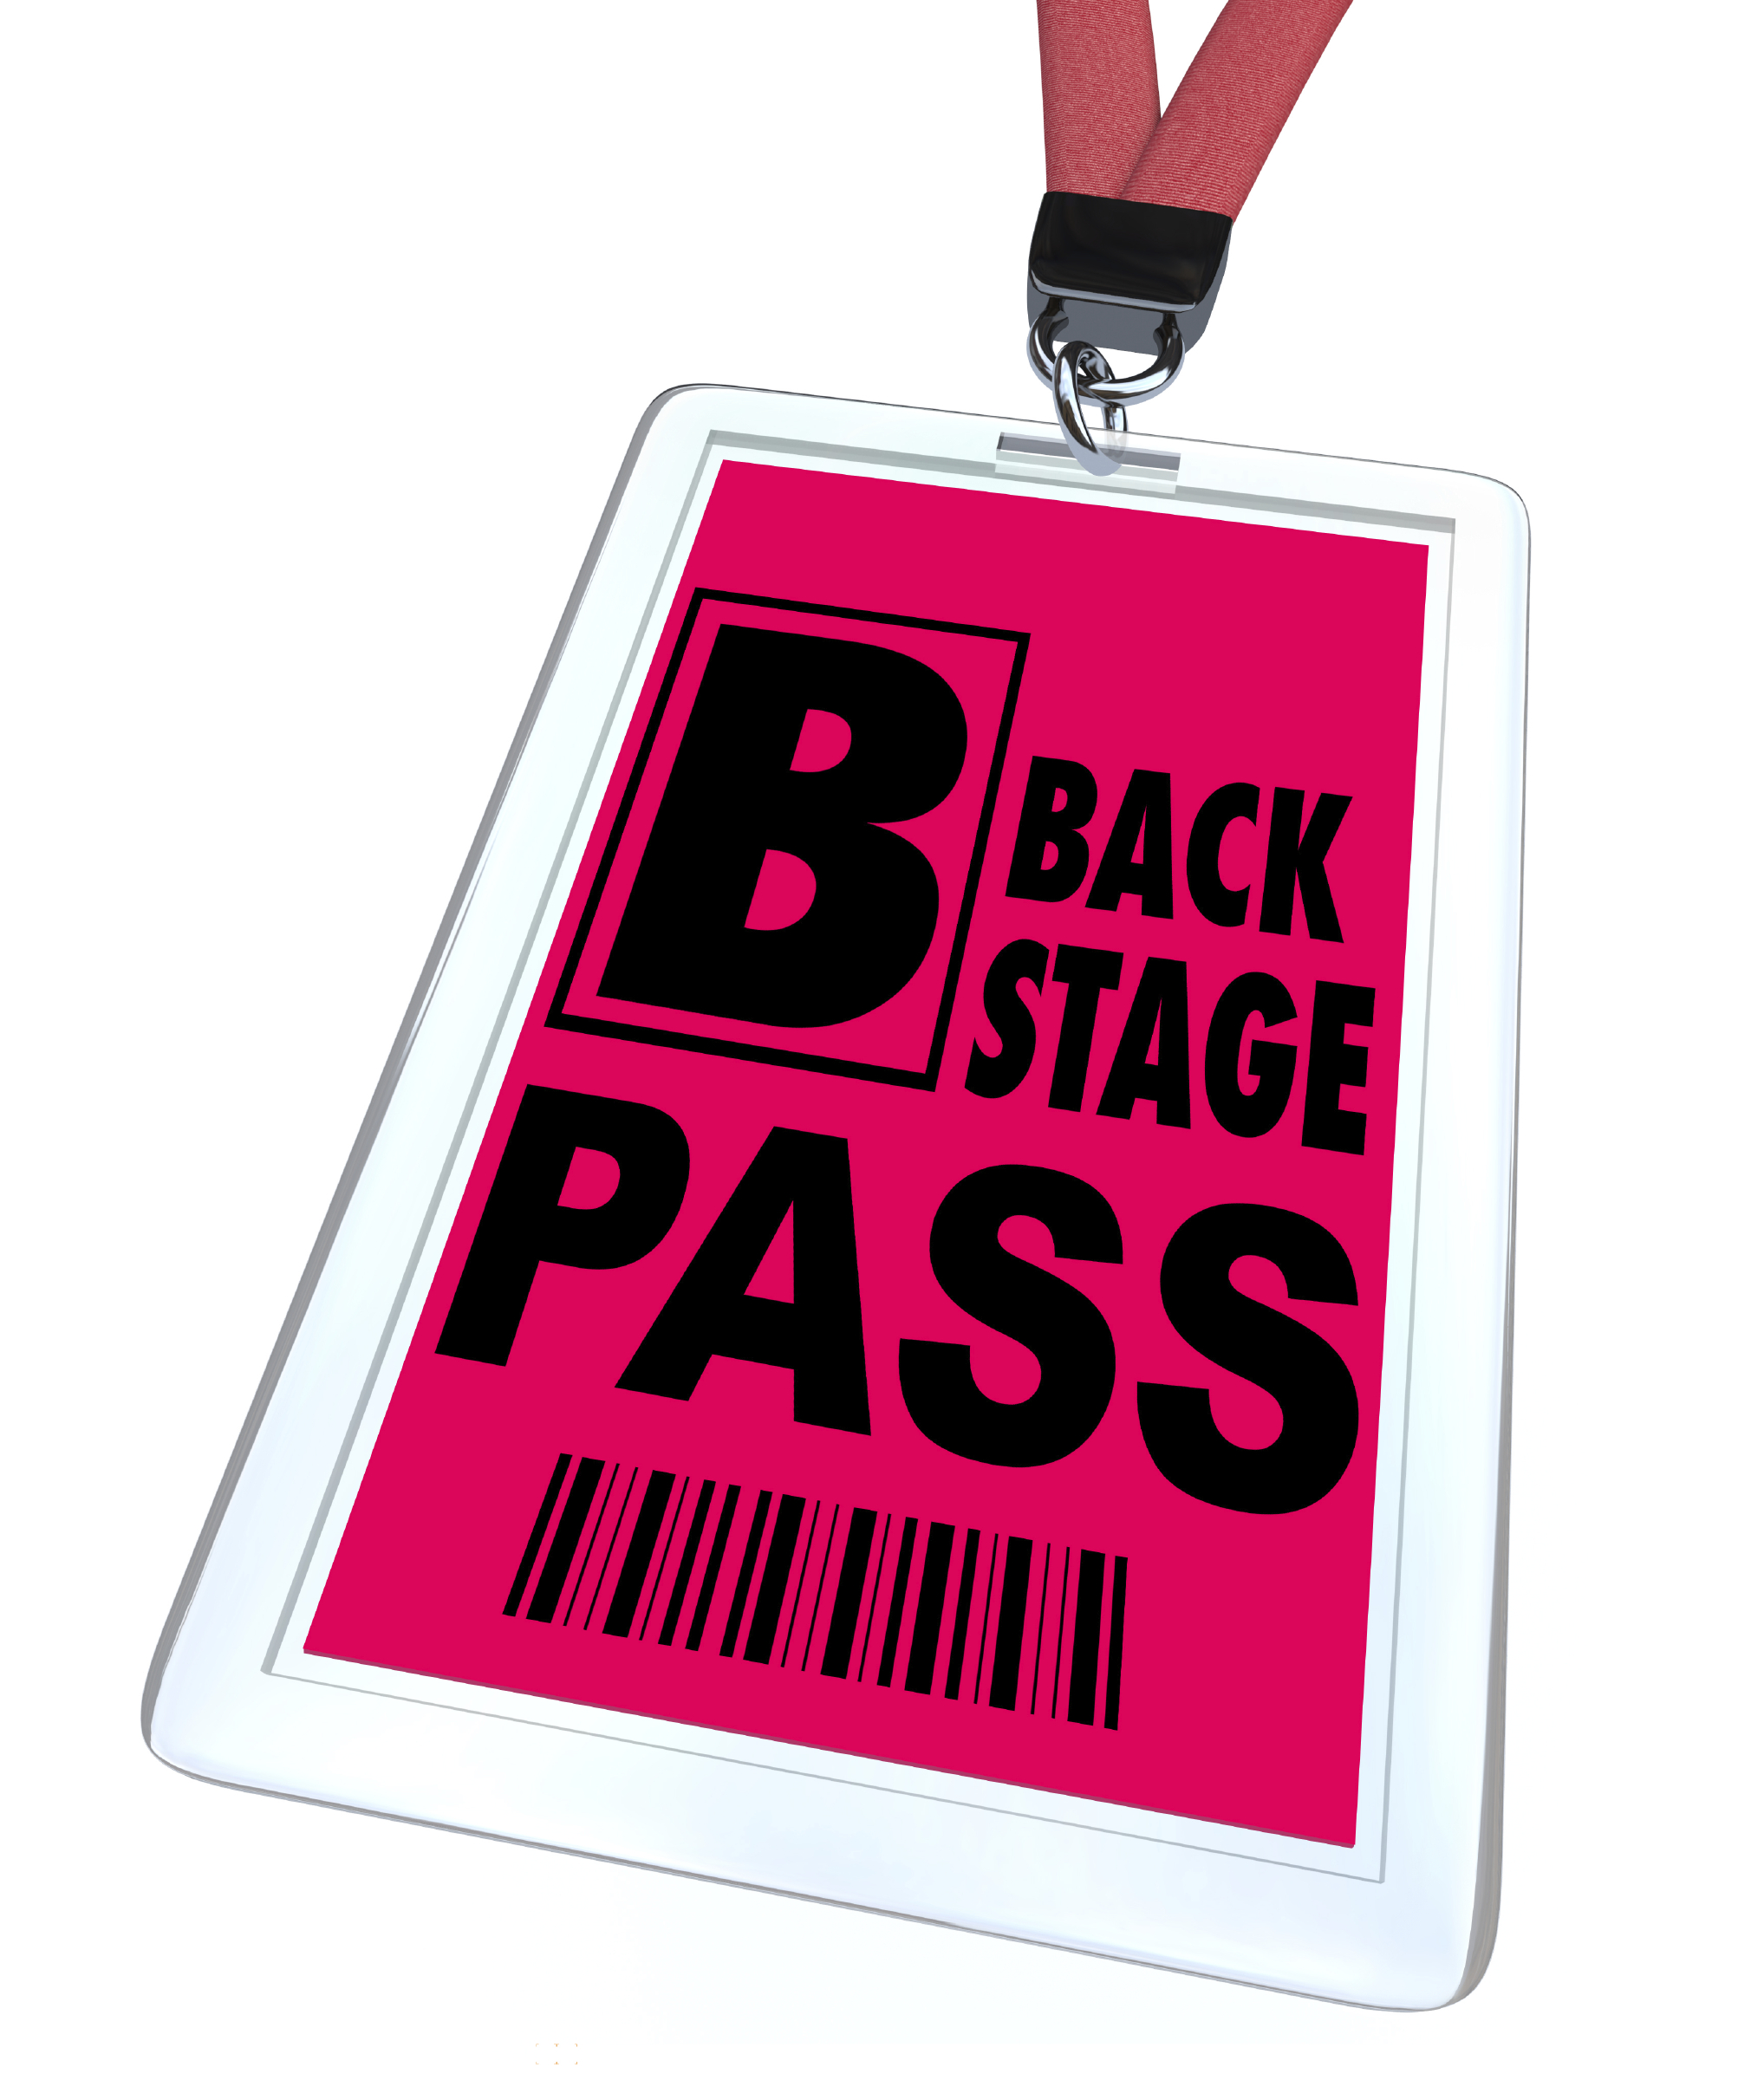 Backstage Pass #22